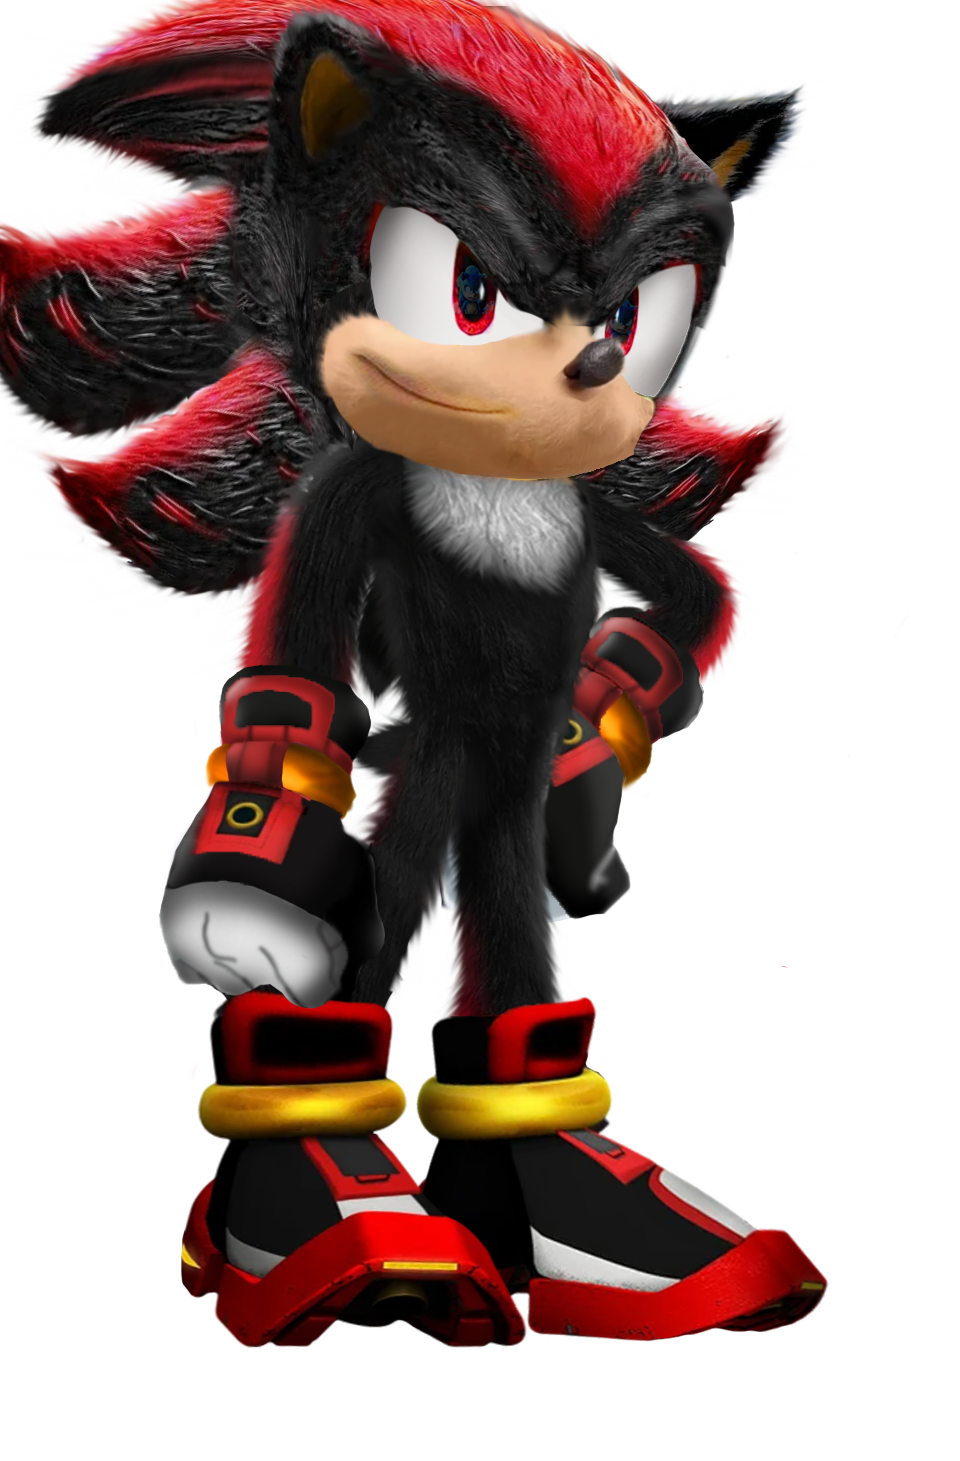 Shadow the Hedgehog, Sonic The Hedgehog Movie Wiki